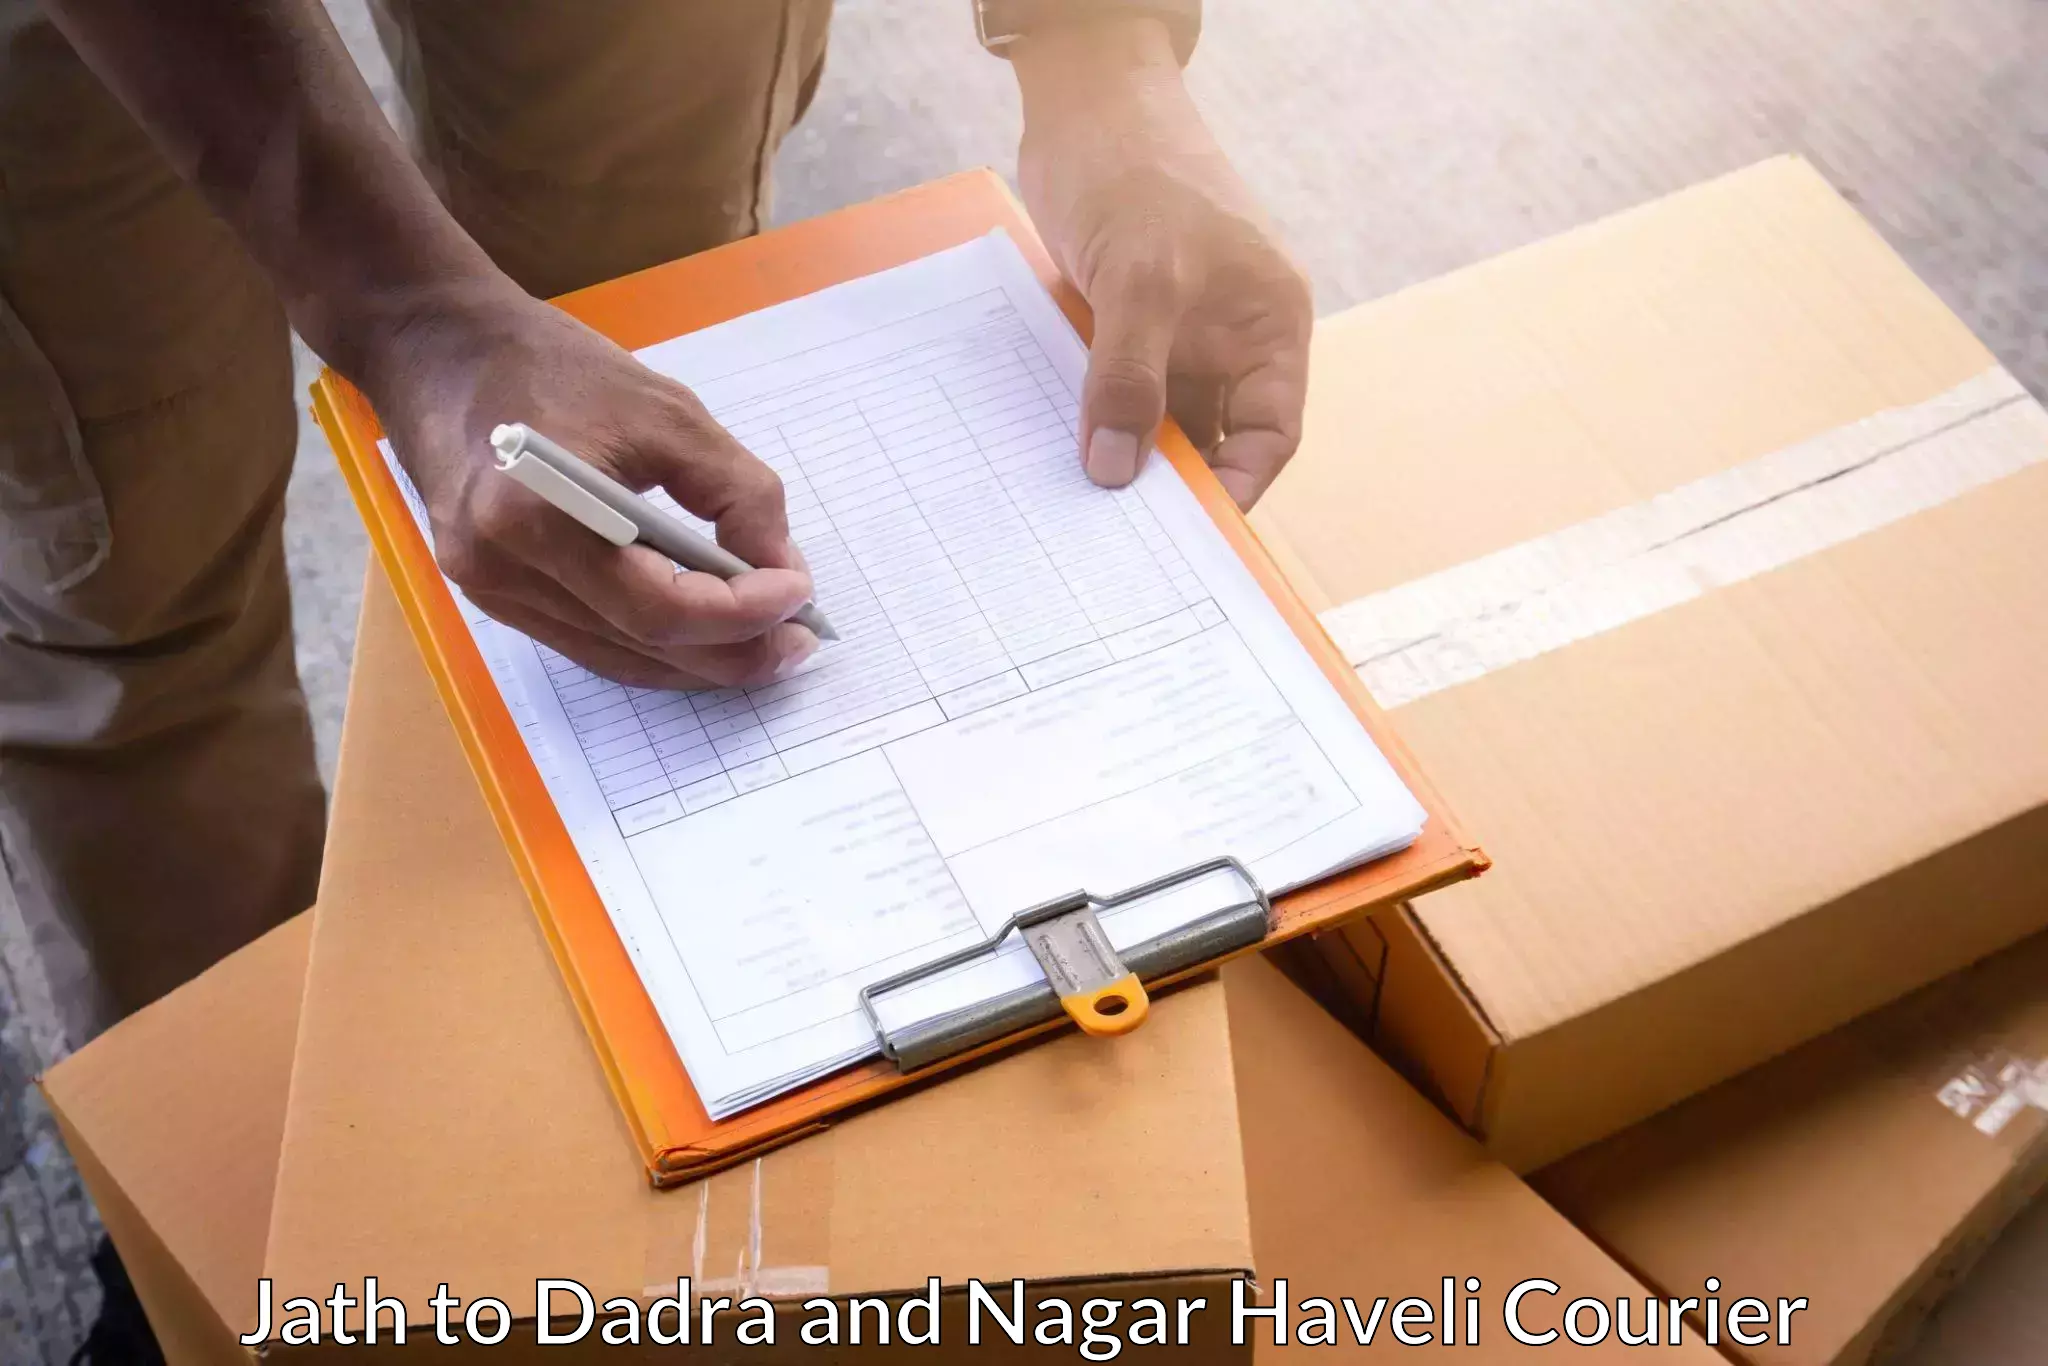 Multi-national courier services Jath to Silvassa